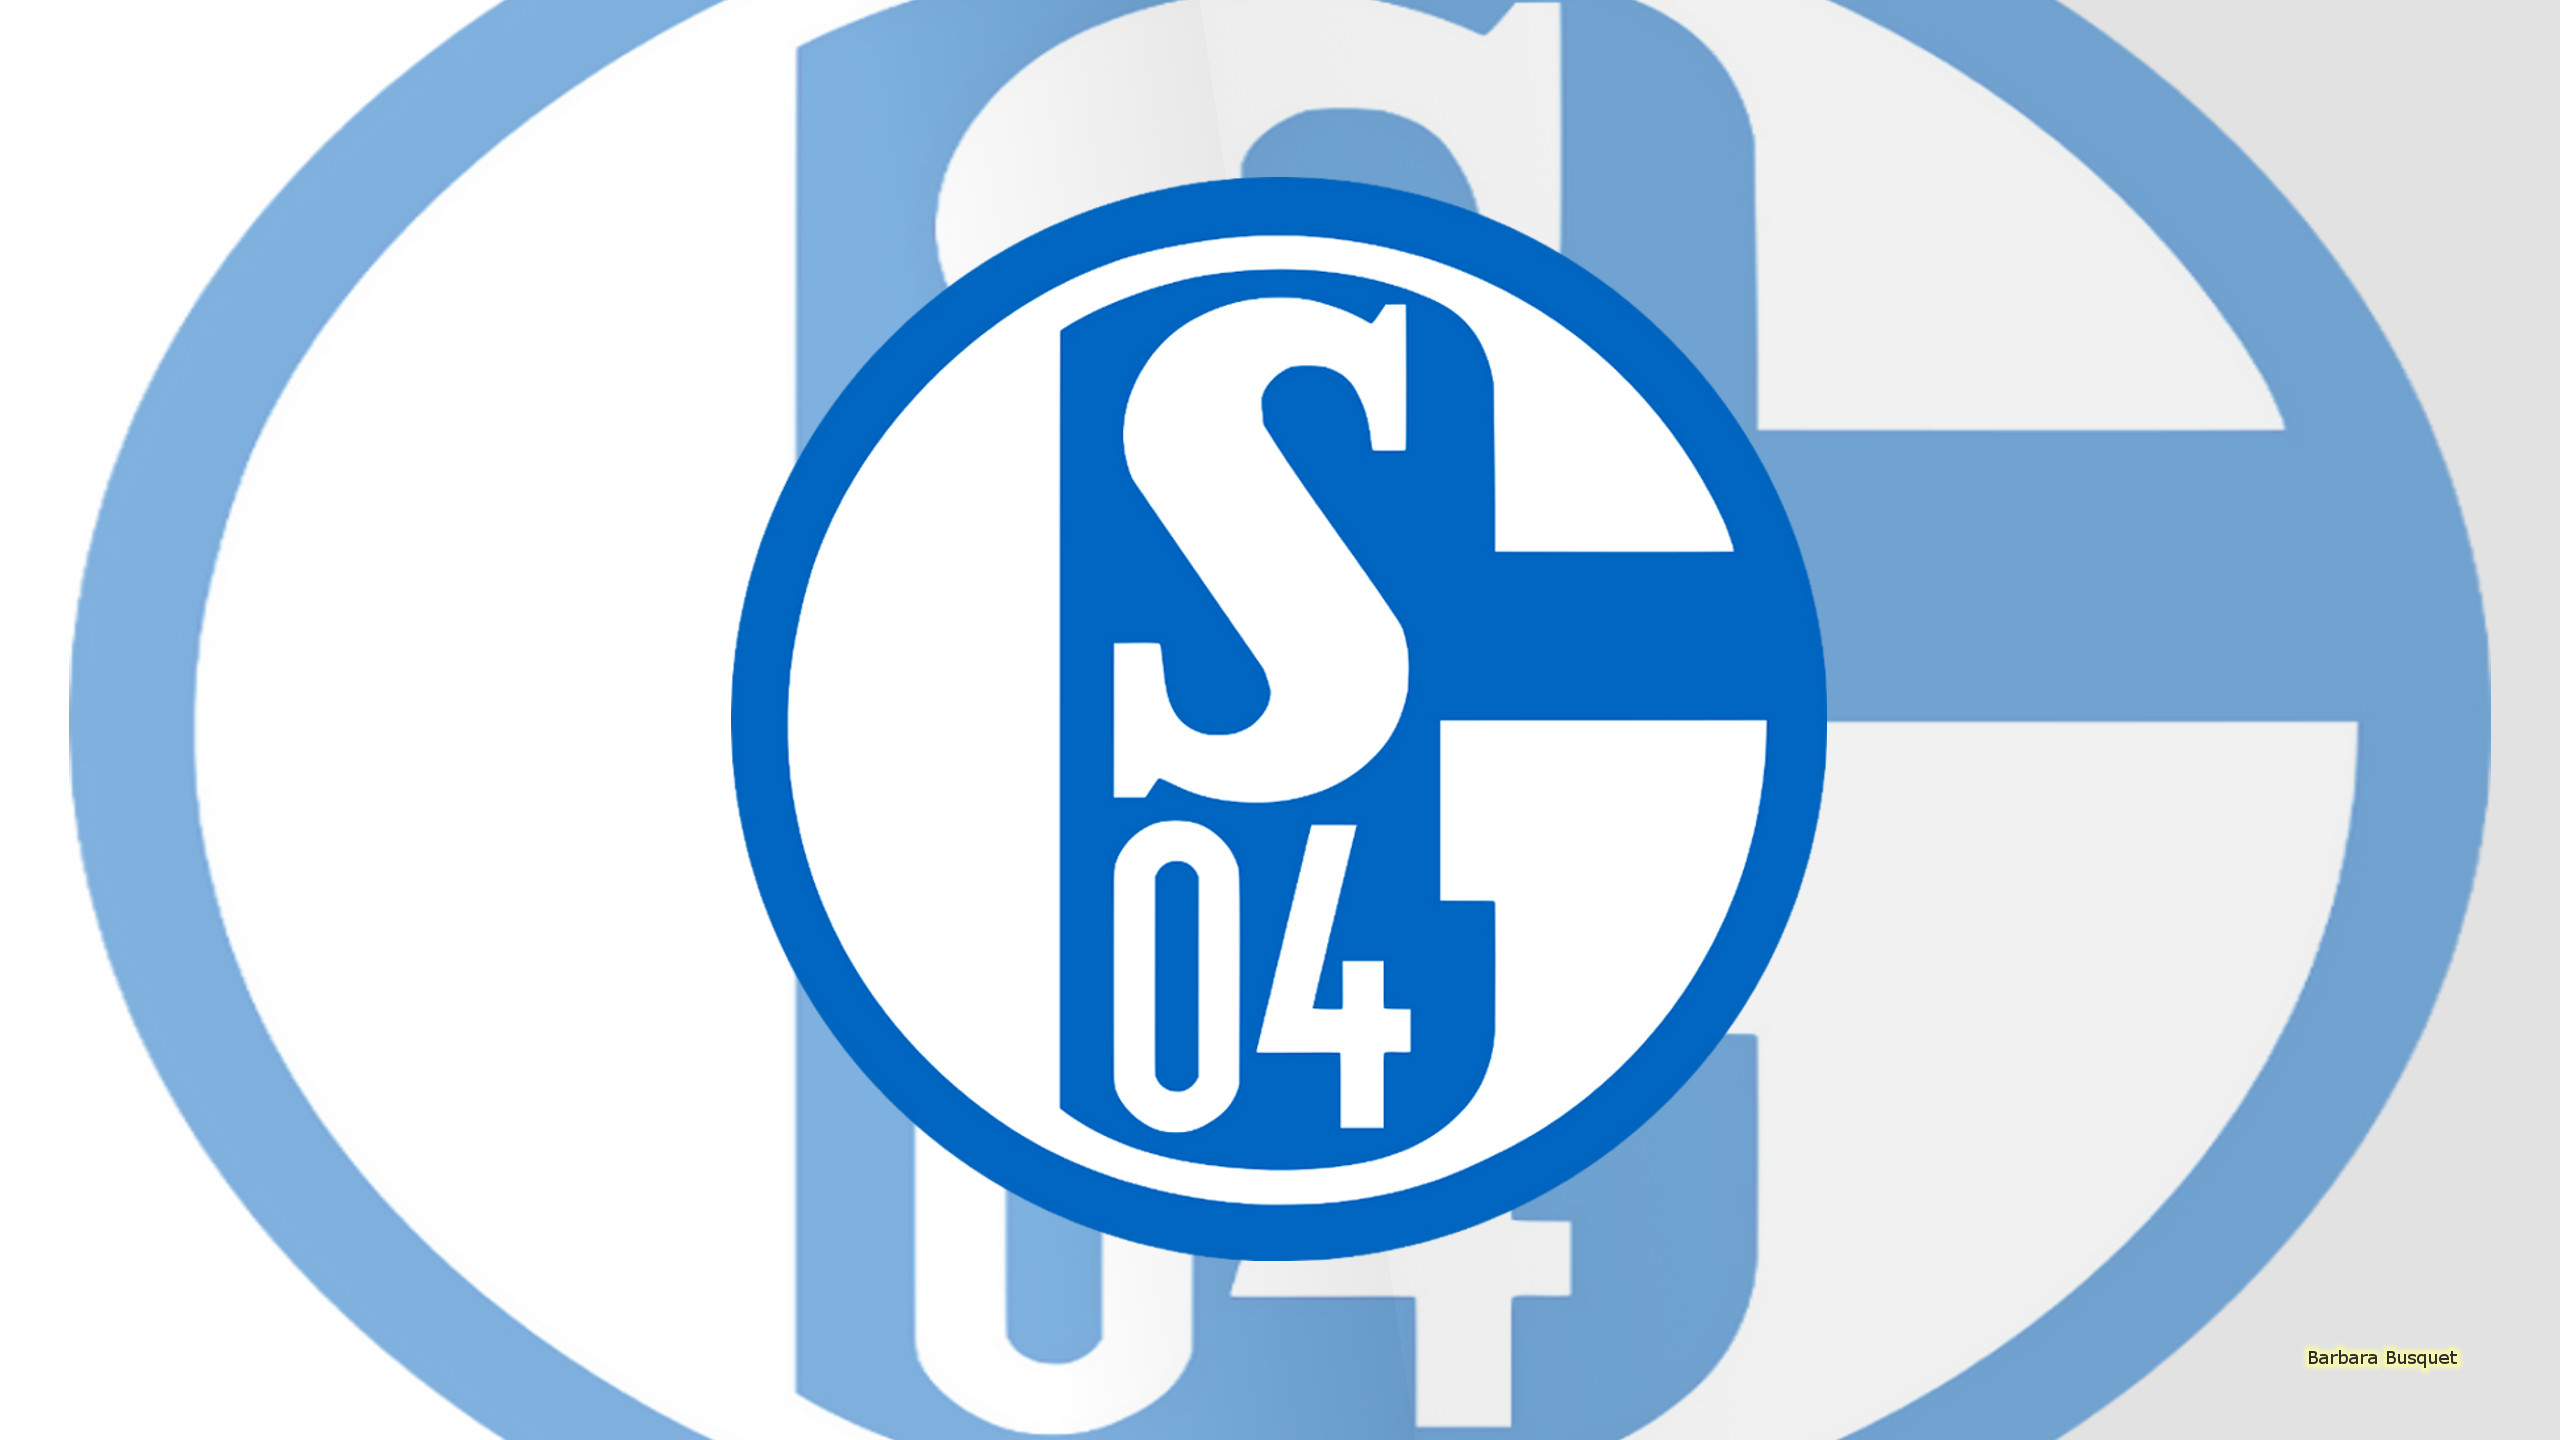 Fc Schalke 04 Wallpapers